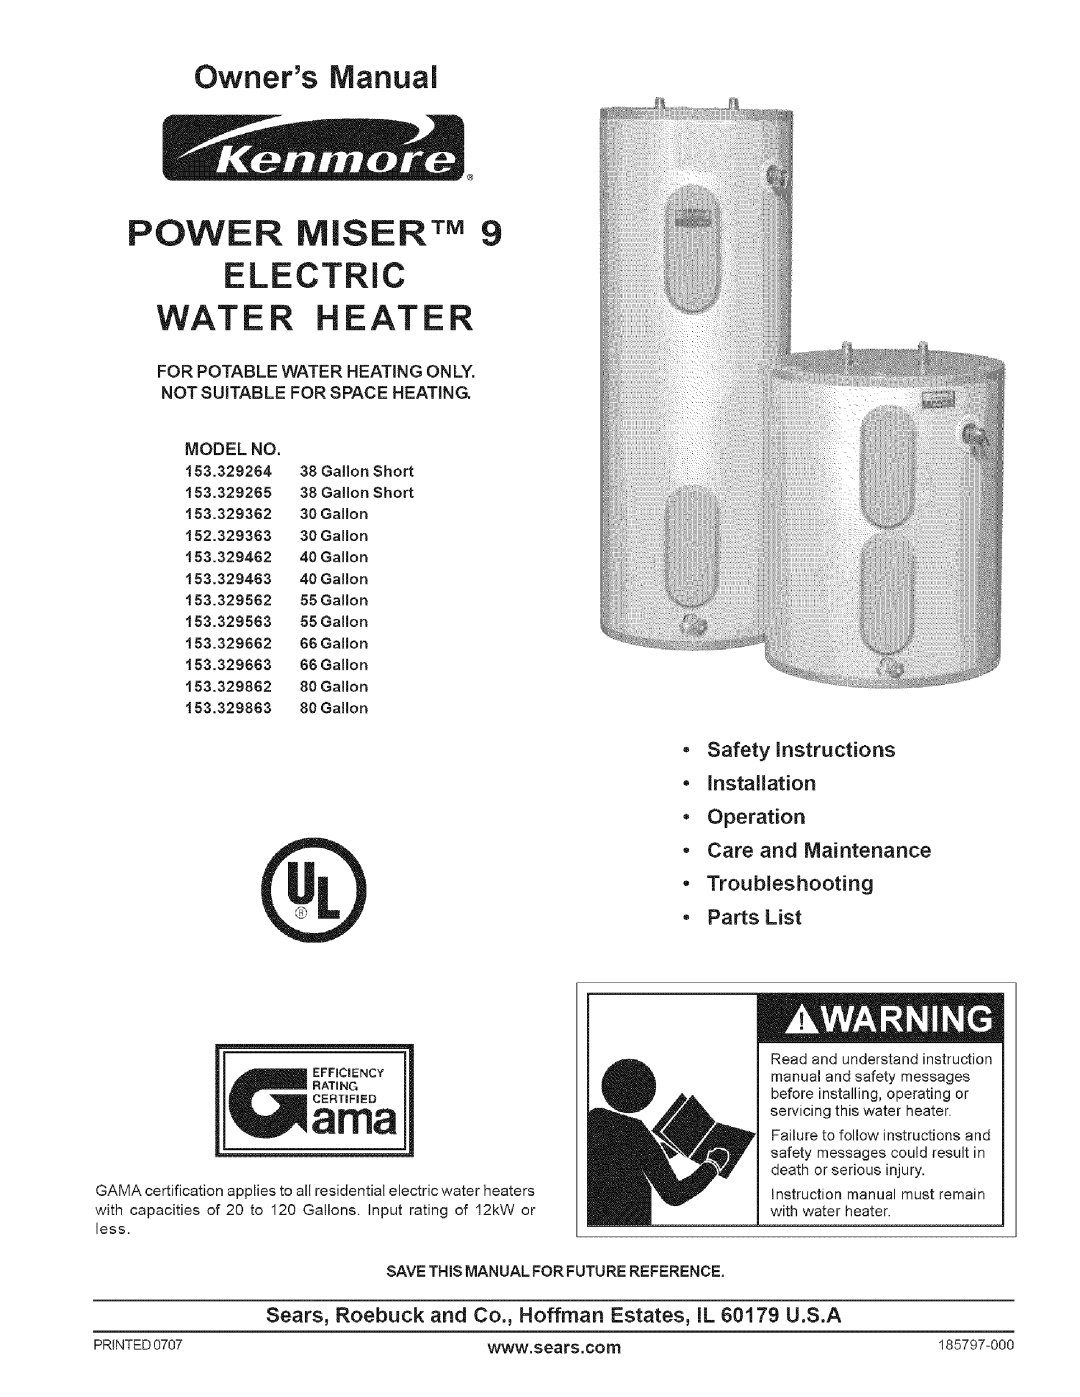 Kenmore I 52.329363 30 GALLON instruction manual Electric, Owners ManuaJ, Power Misertm, Water Heater 